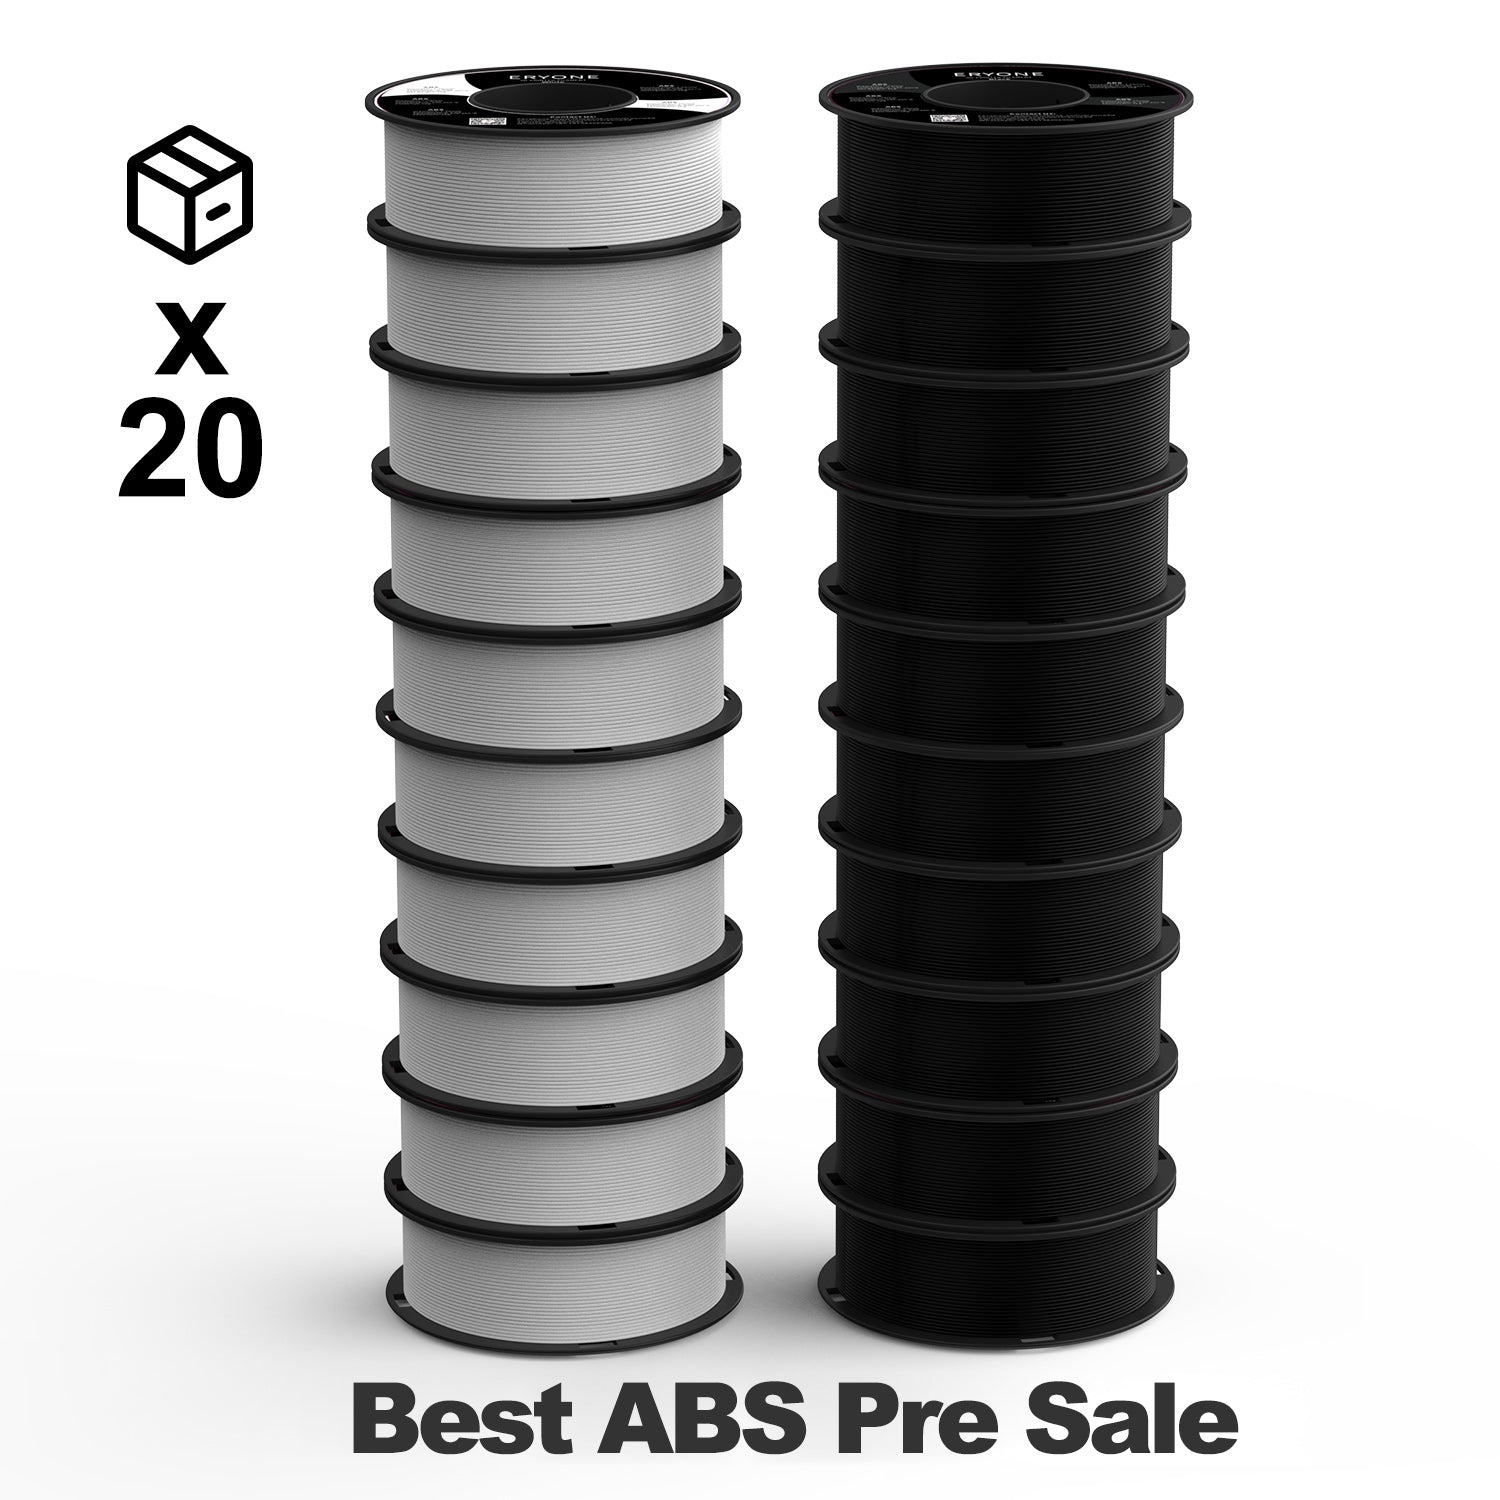 Filament ABS ERYONE for impressive 3D 1.75mm, dimensional precision +/- 0.05 mm 1kg (2.2LBS)/pool